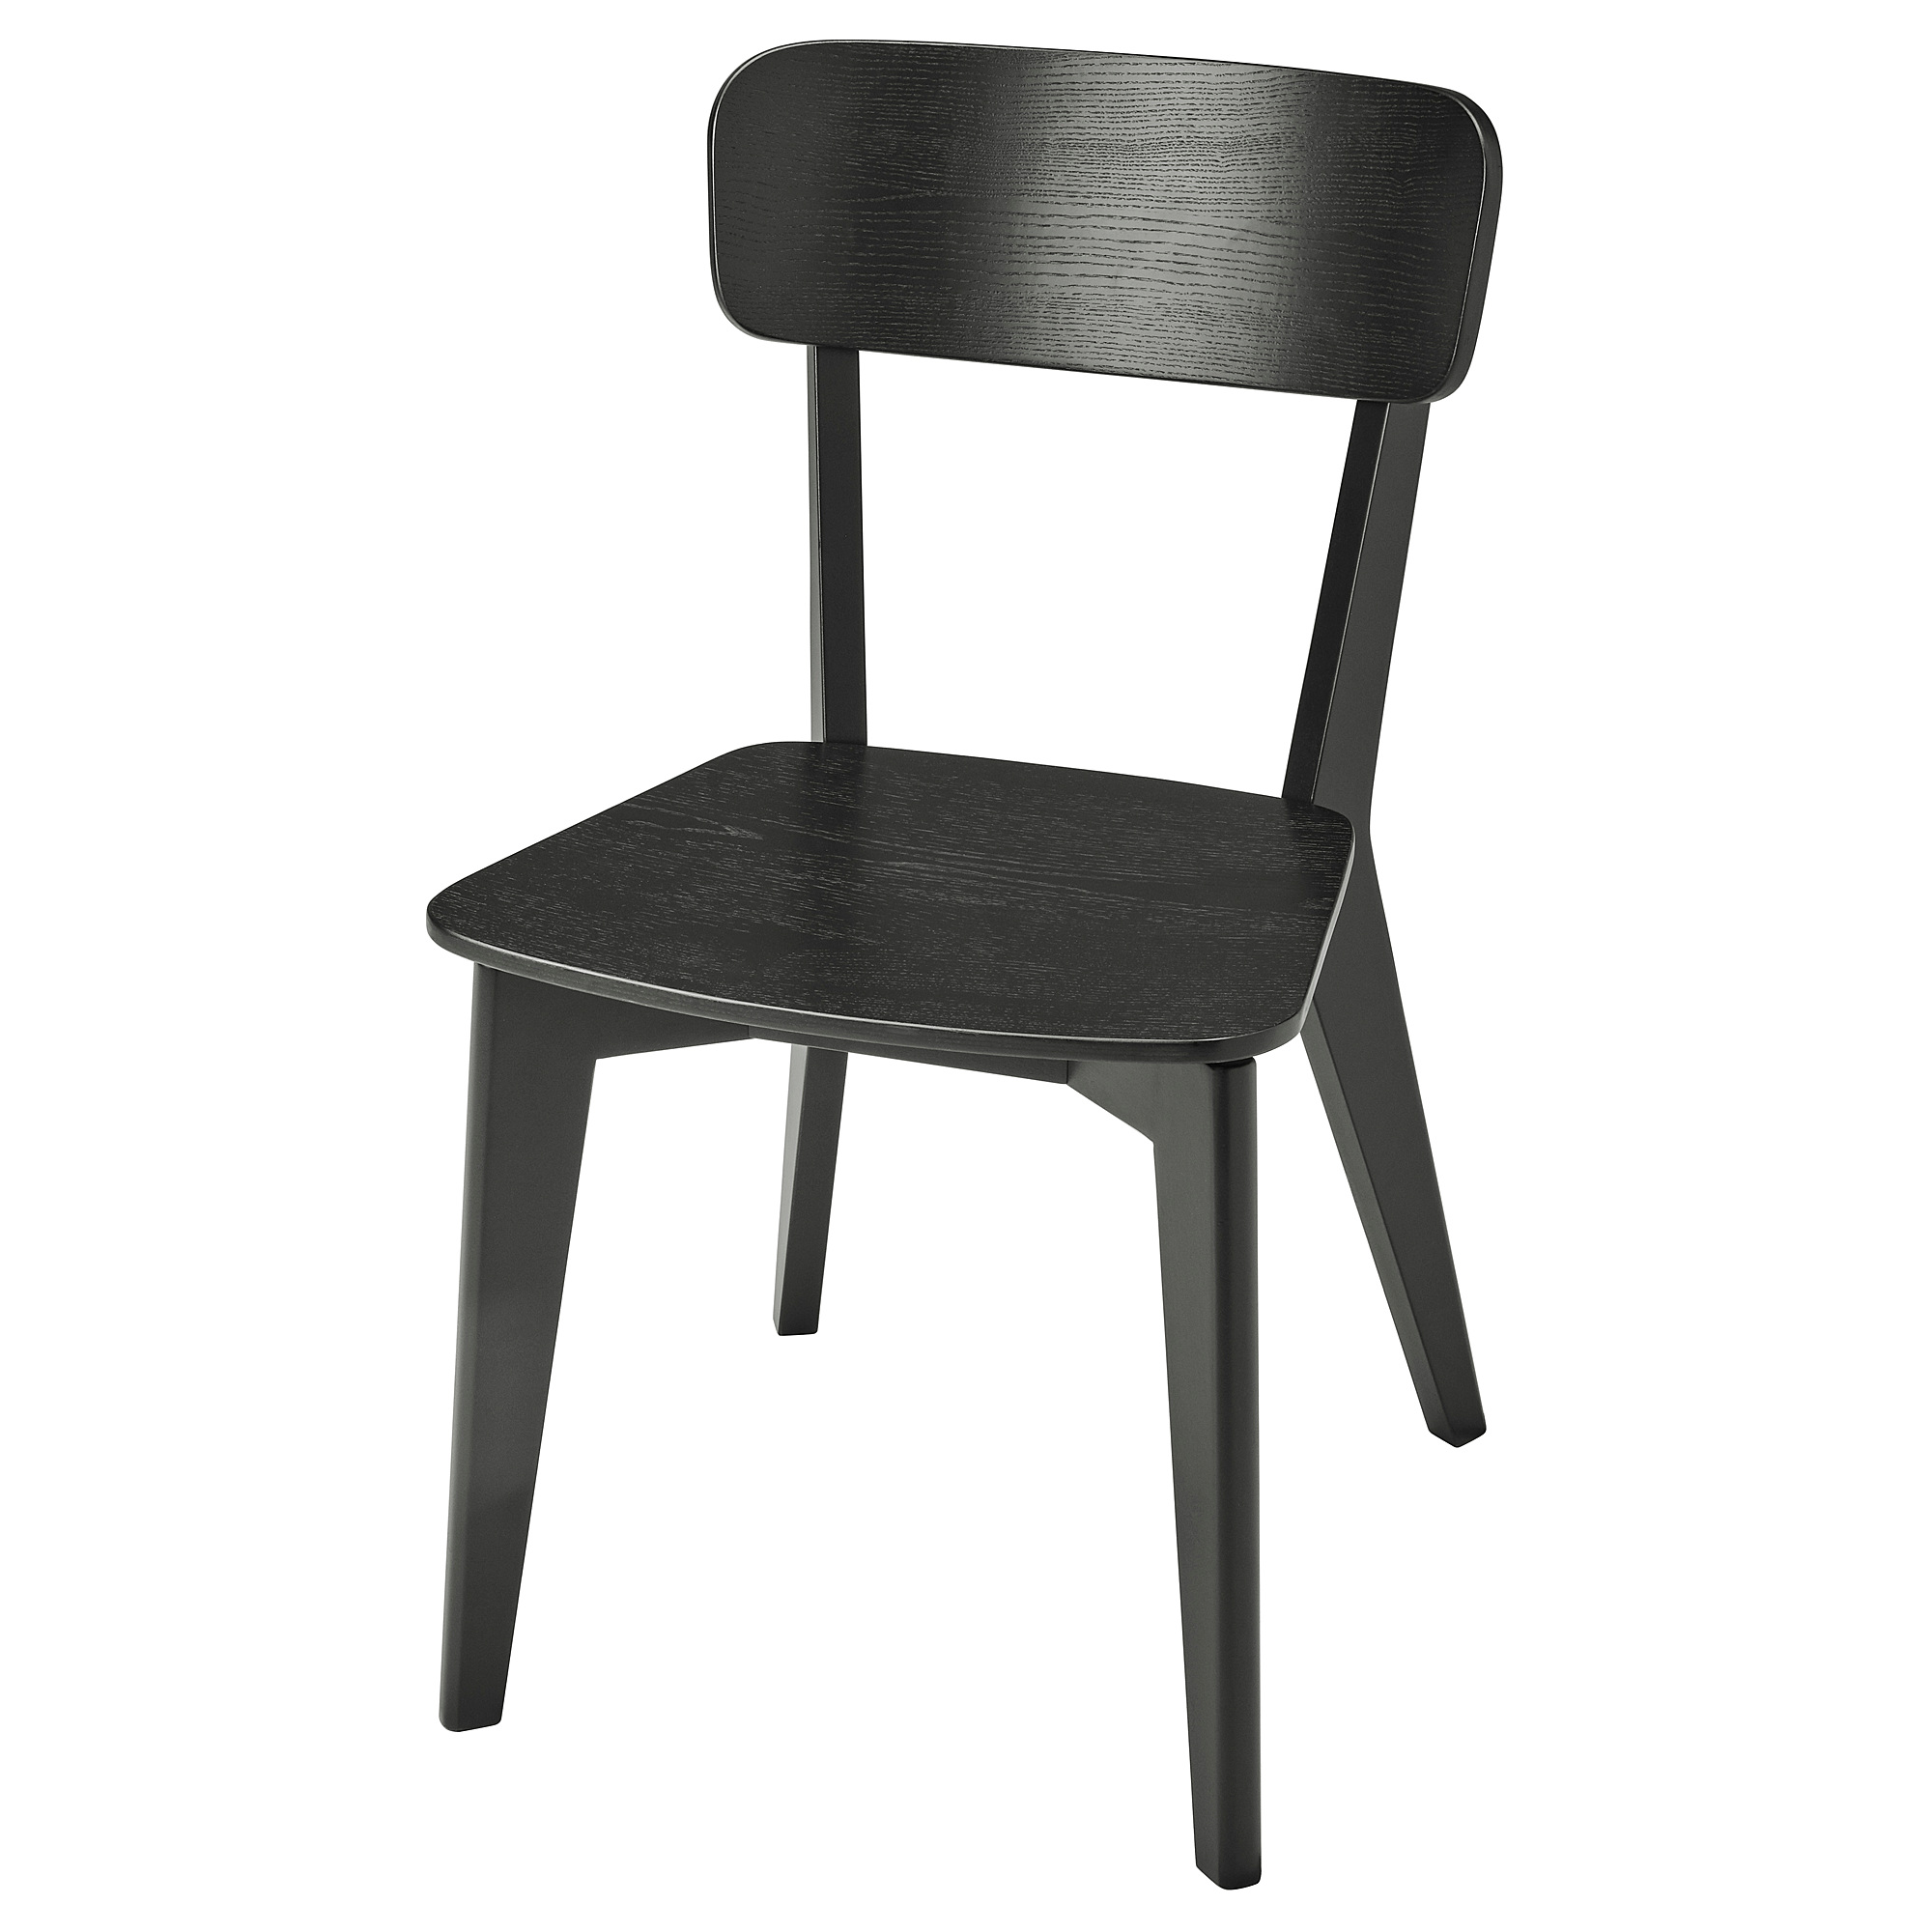 LISABO chair